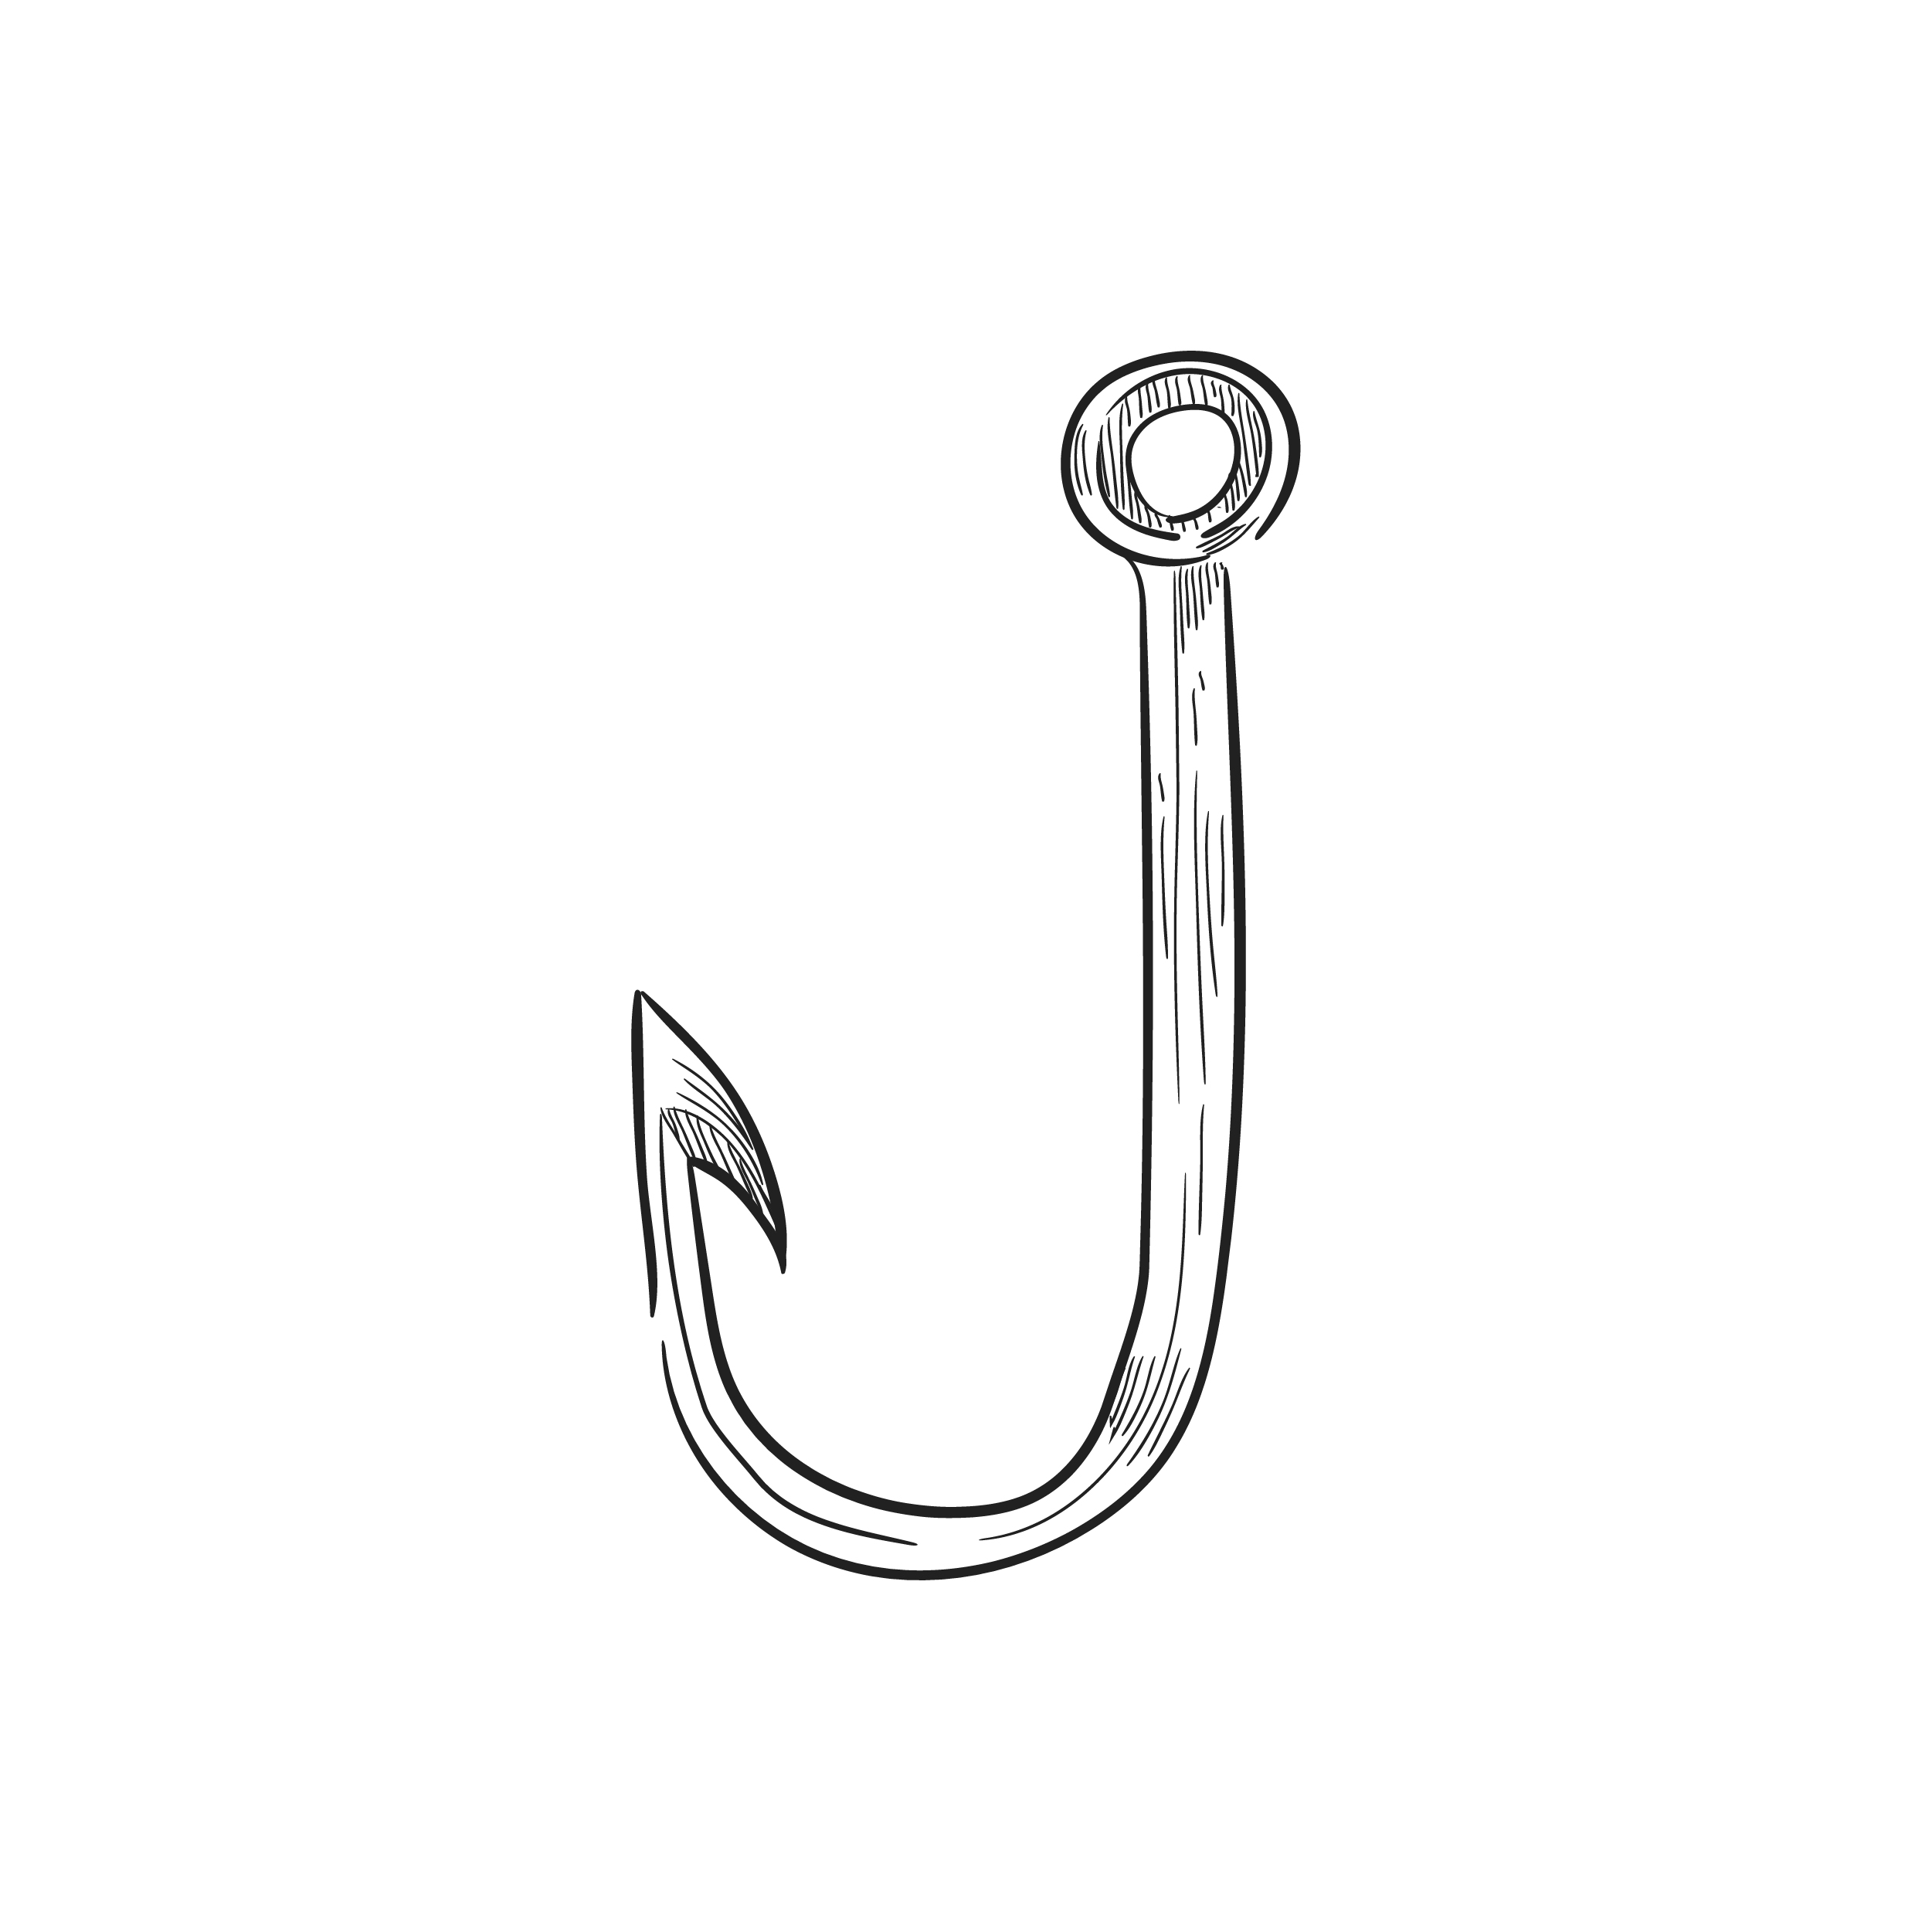 Vintage illustration of a fishing hook - Download Free Vectors, Clipart